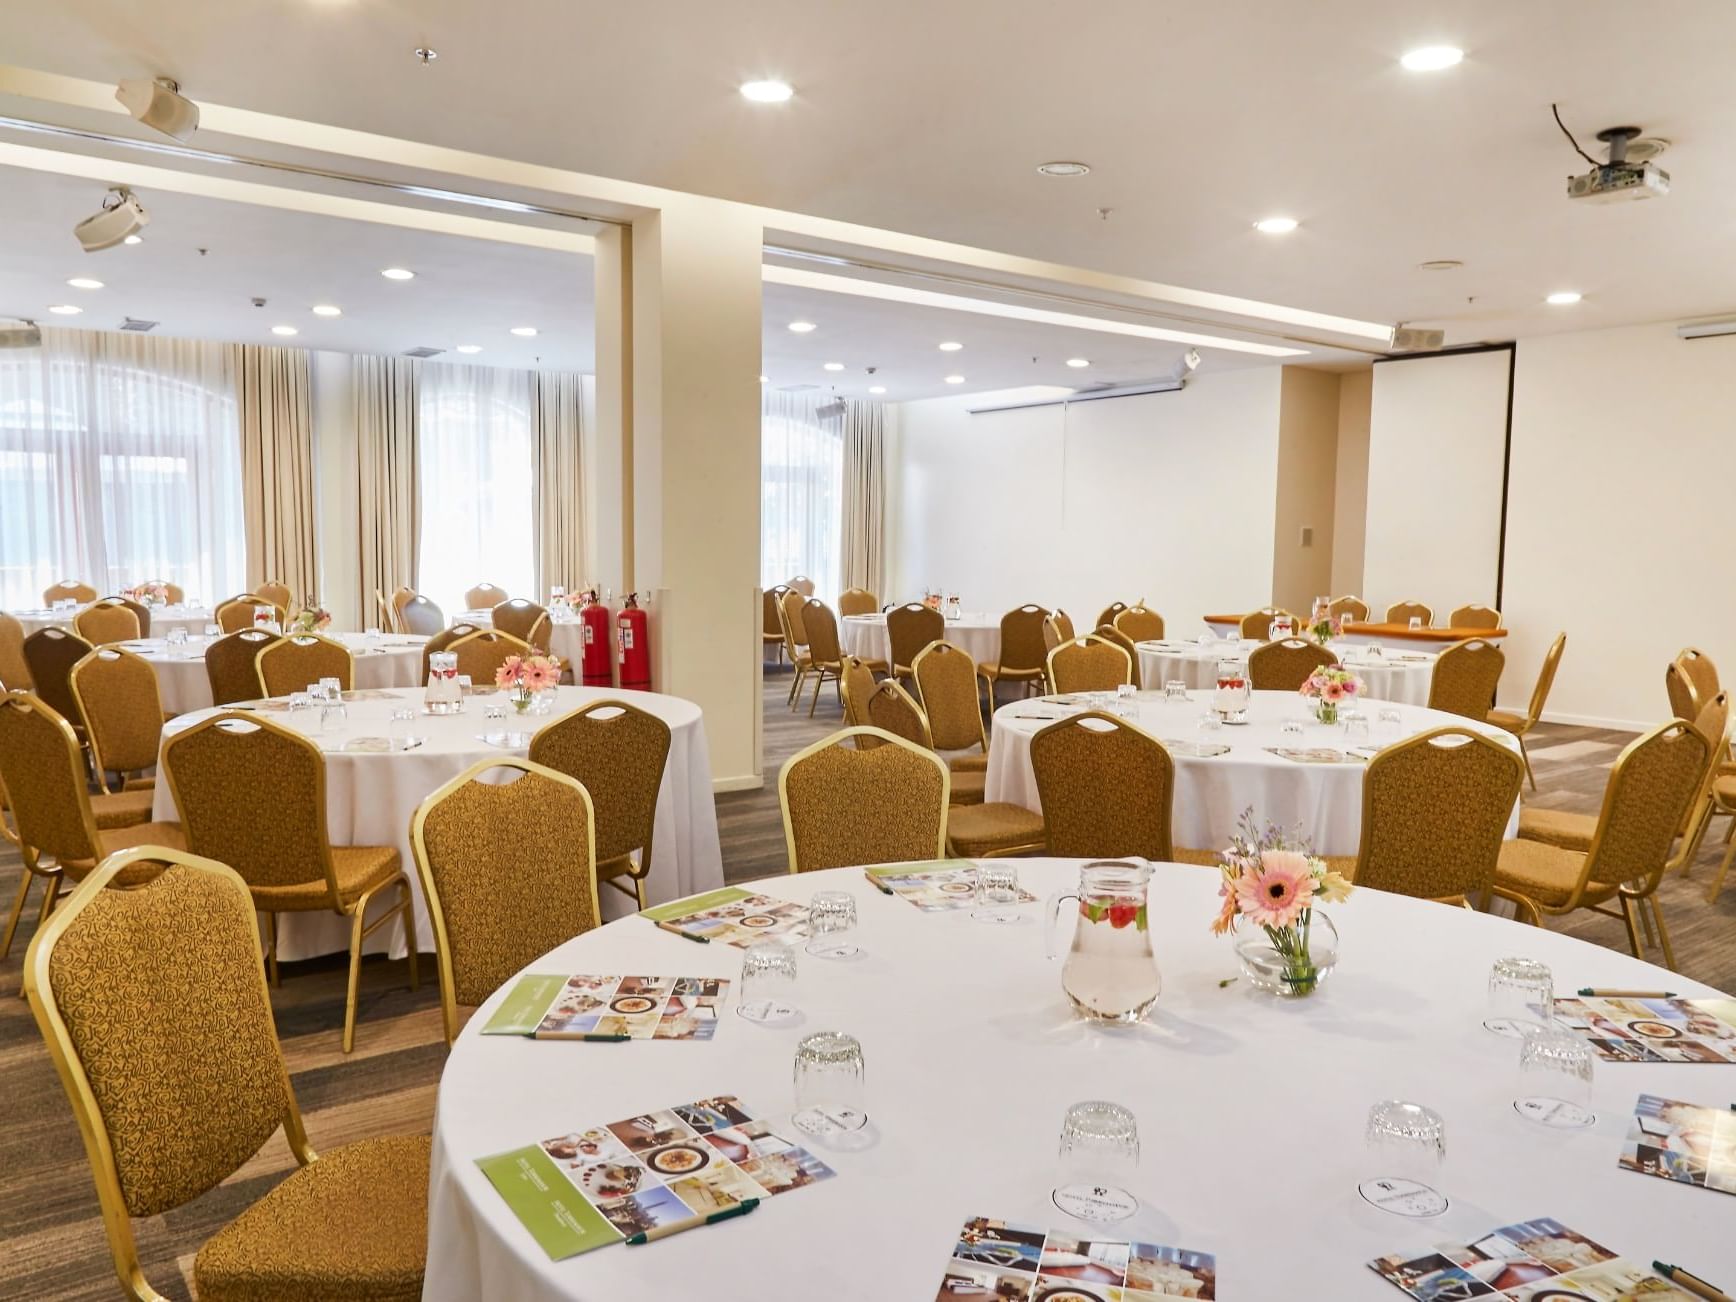 Banquet table setup in Parma Full Room at Hotel Torremayor Lyon